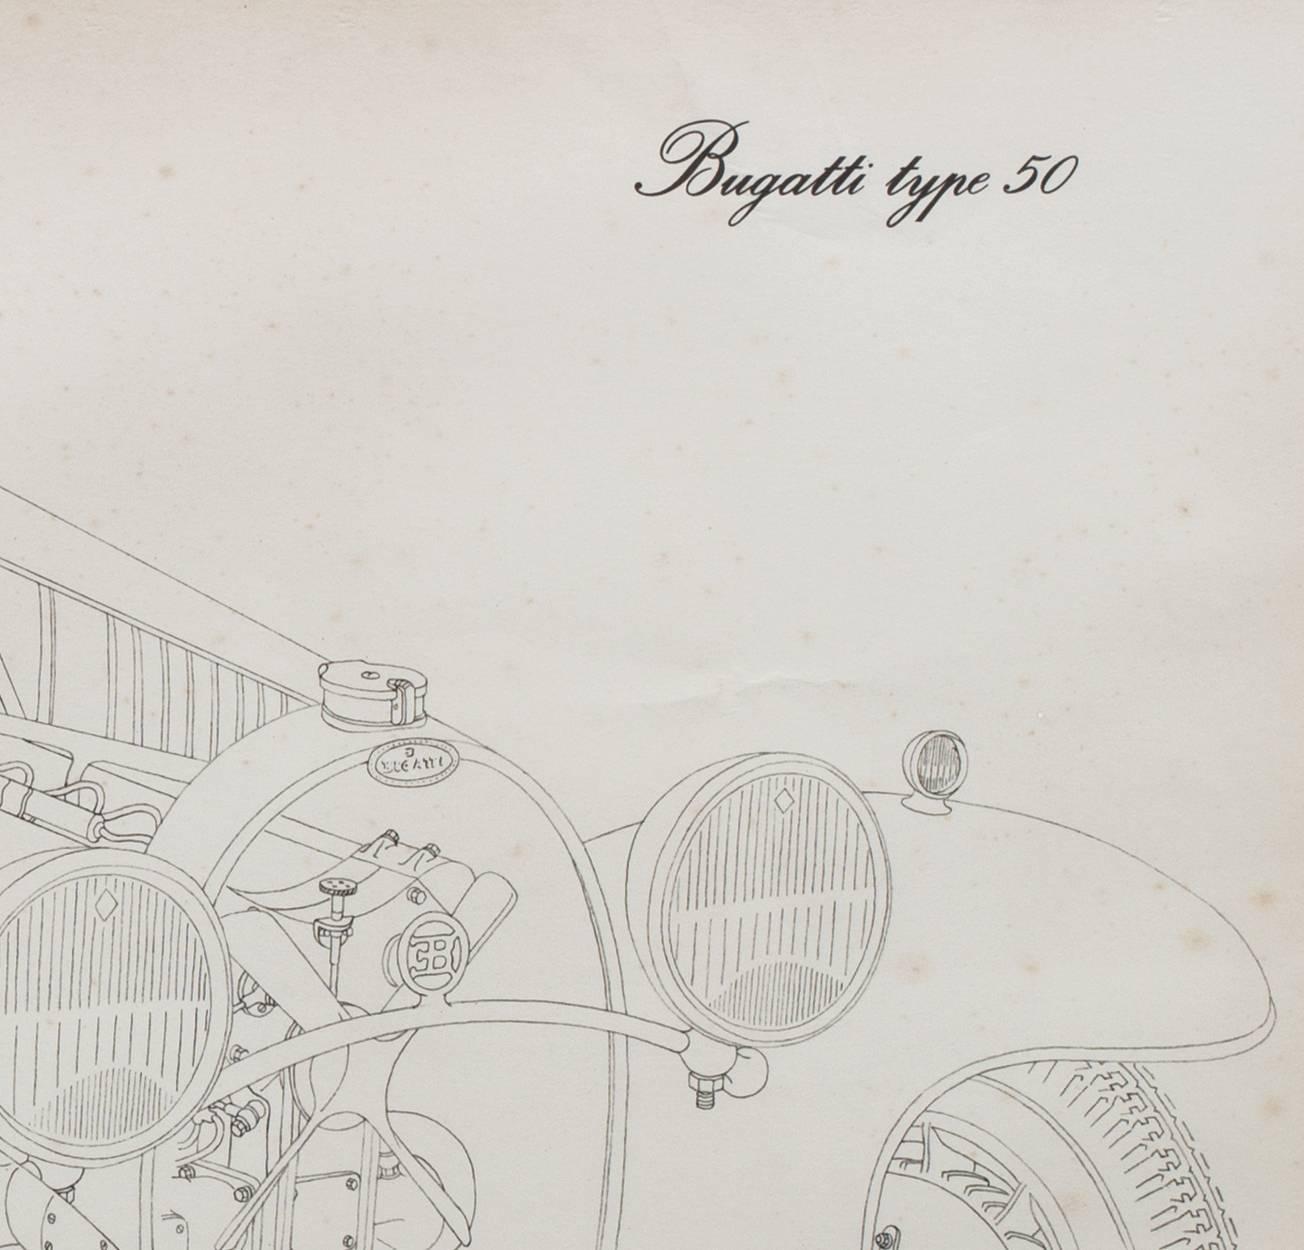 Bugatti type 50 - Print by Robert Jerraud